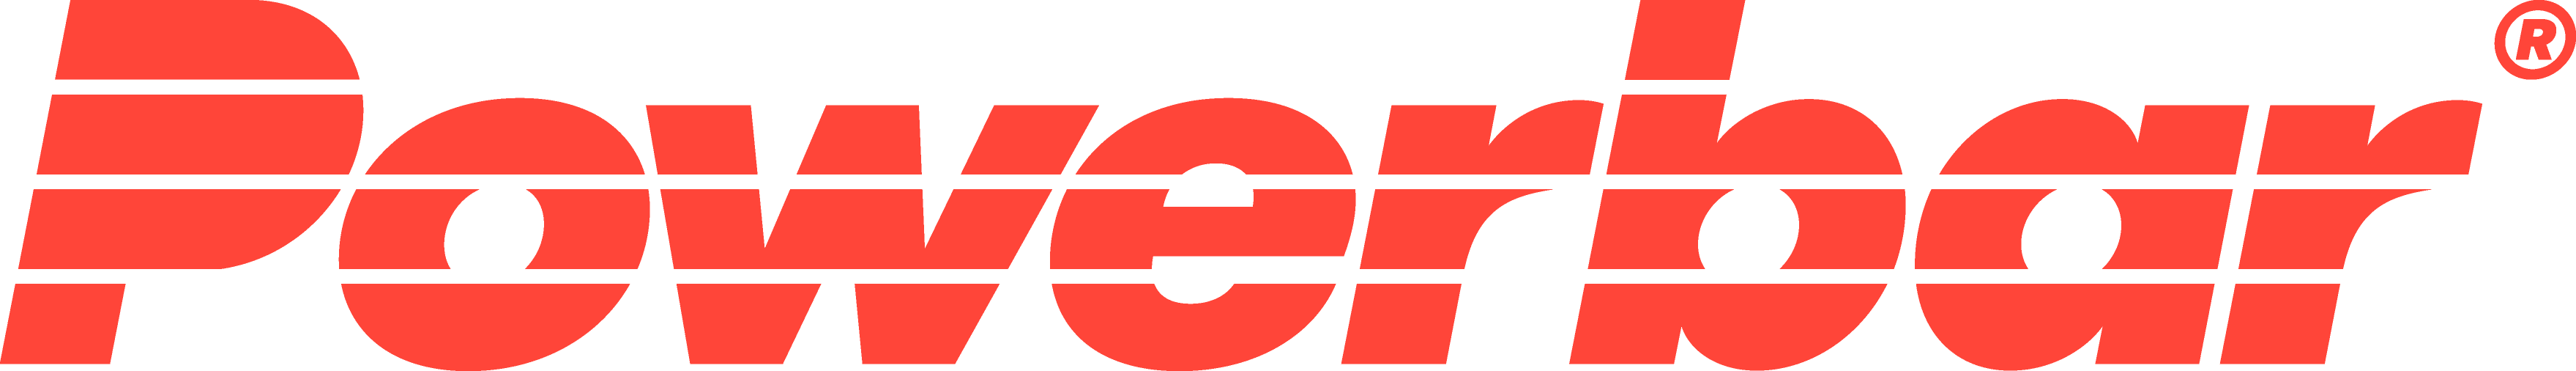 PowerBar logo